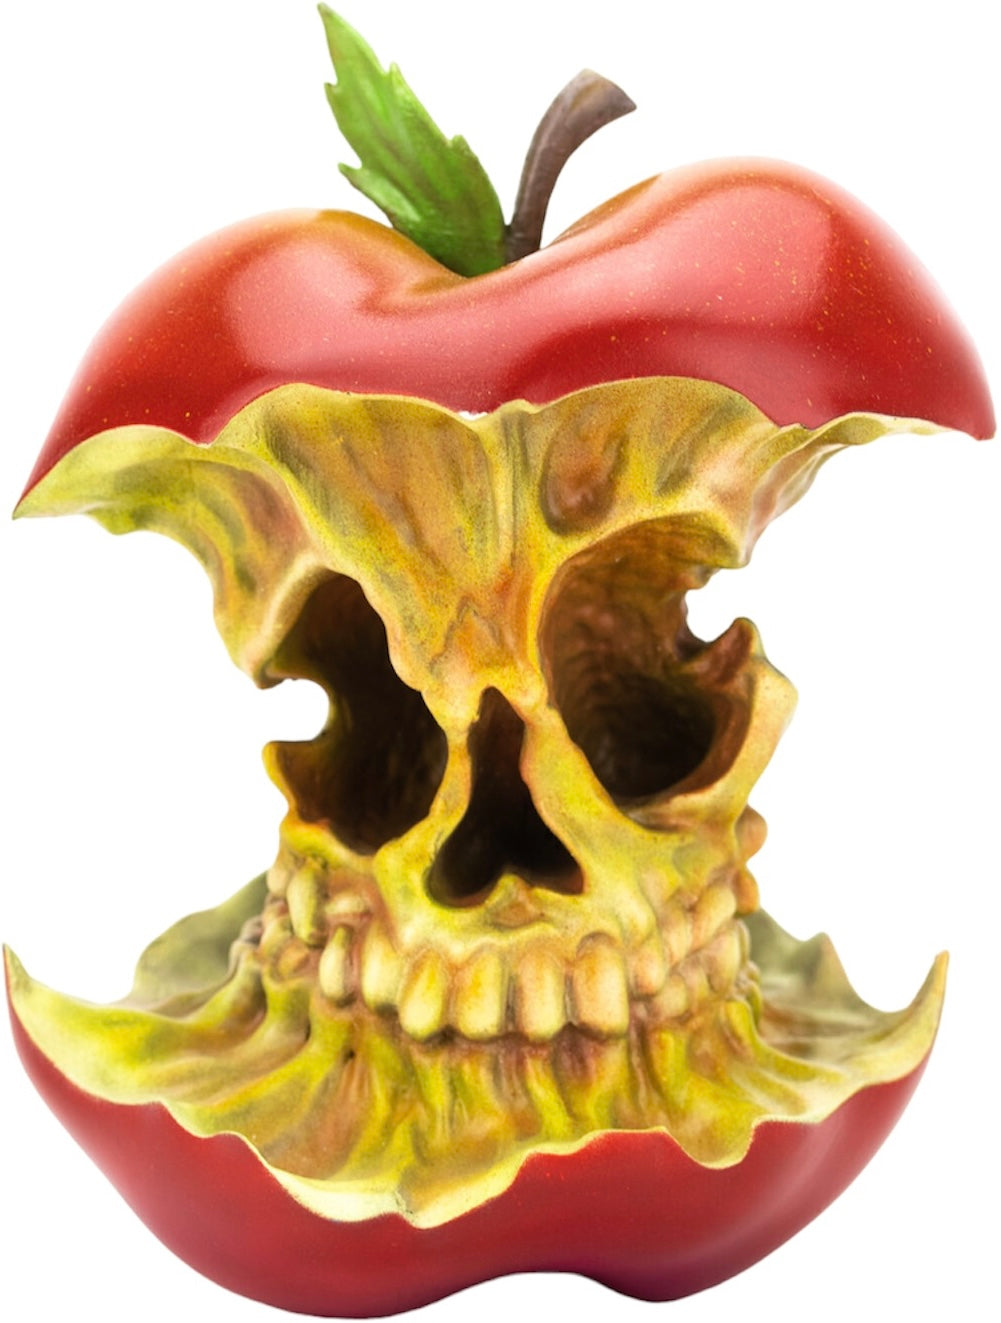 Czee13 “One Bad Apple”